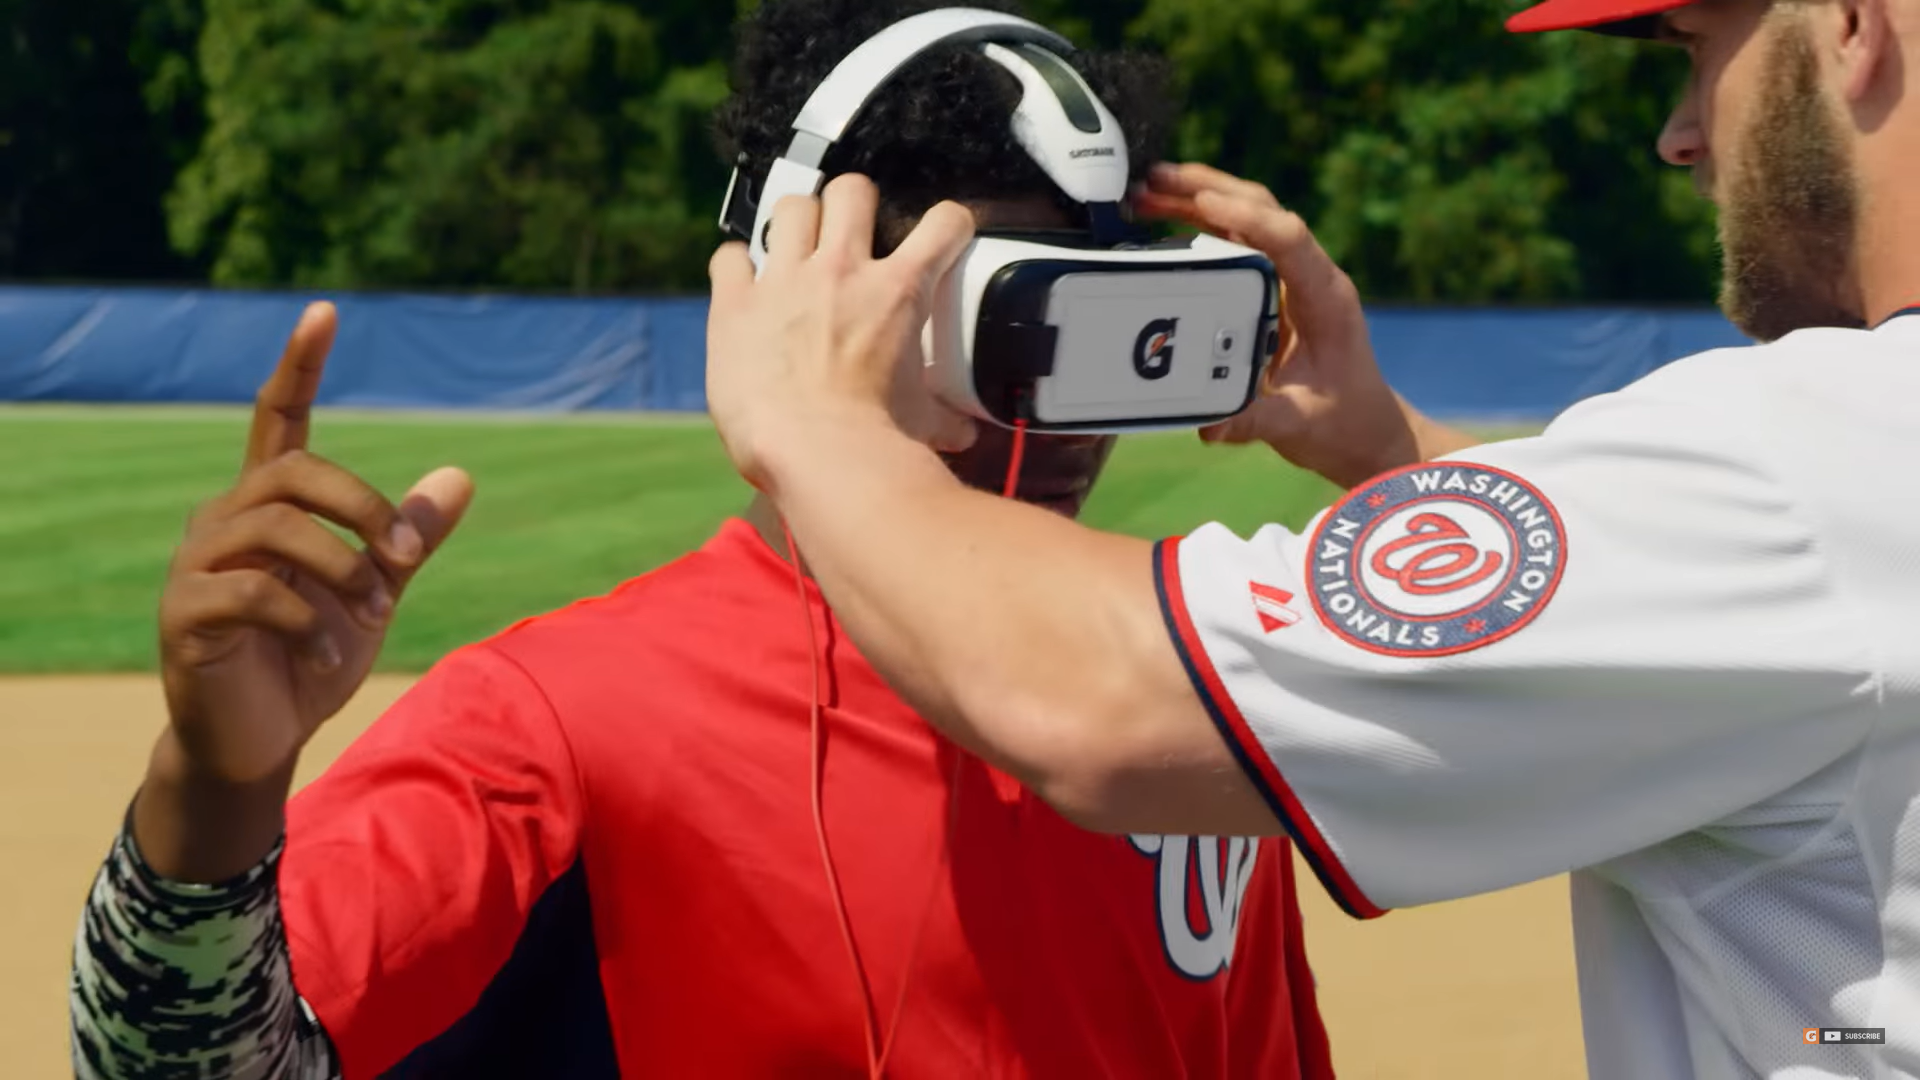 Baseball player in white holds VR headset worn by by baseball player in red